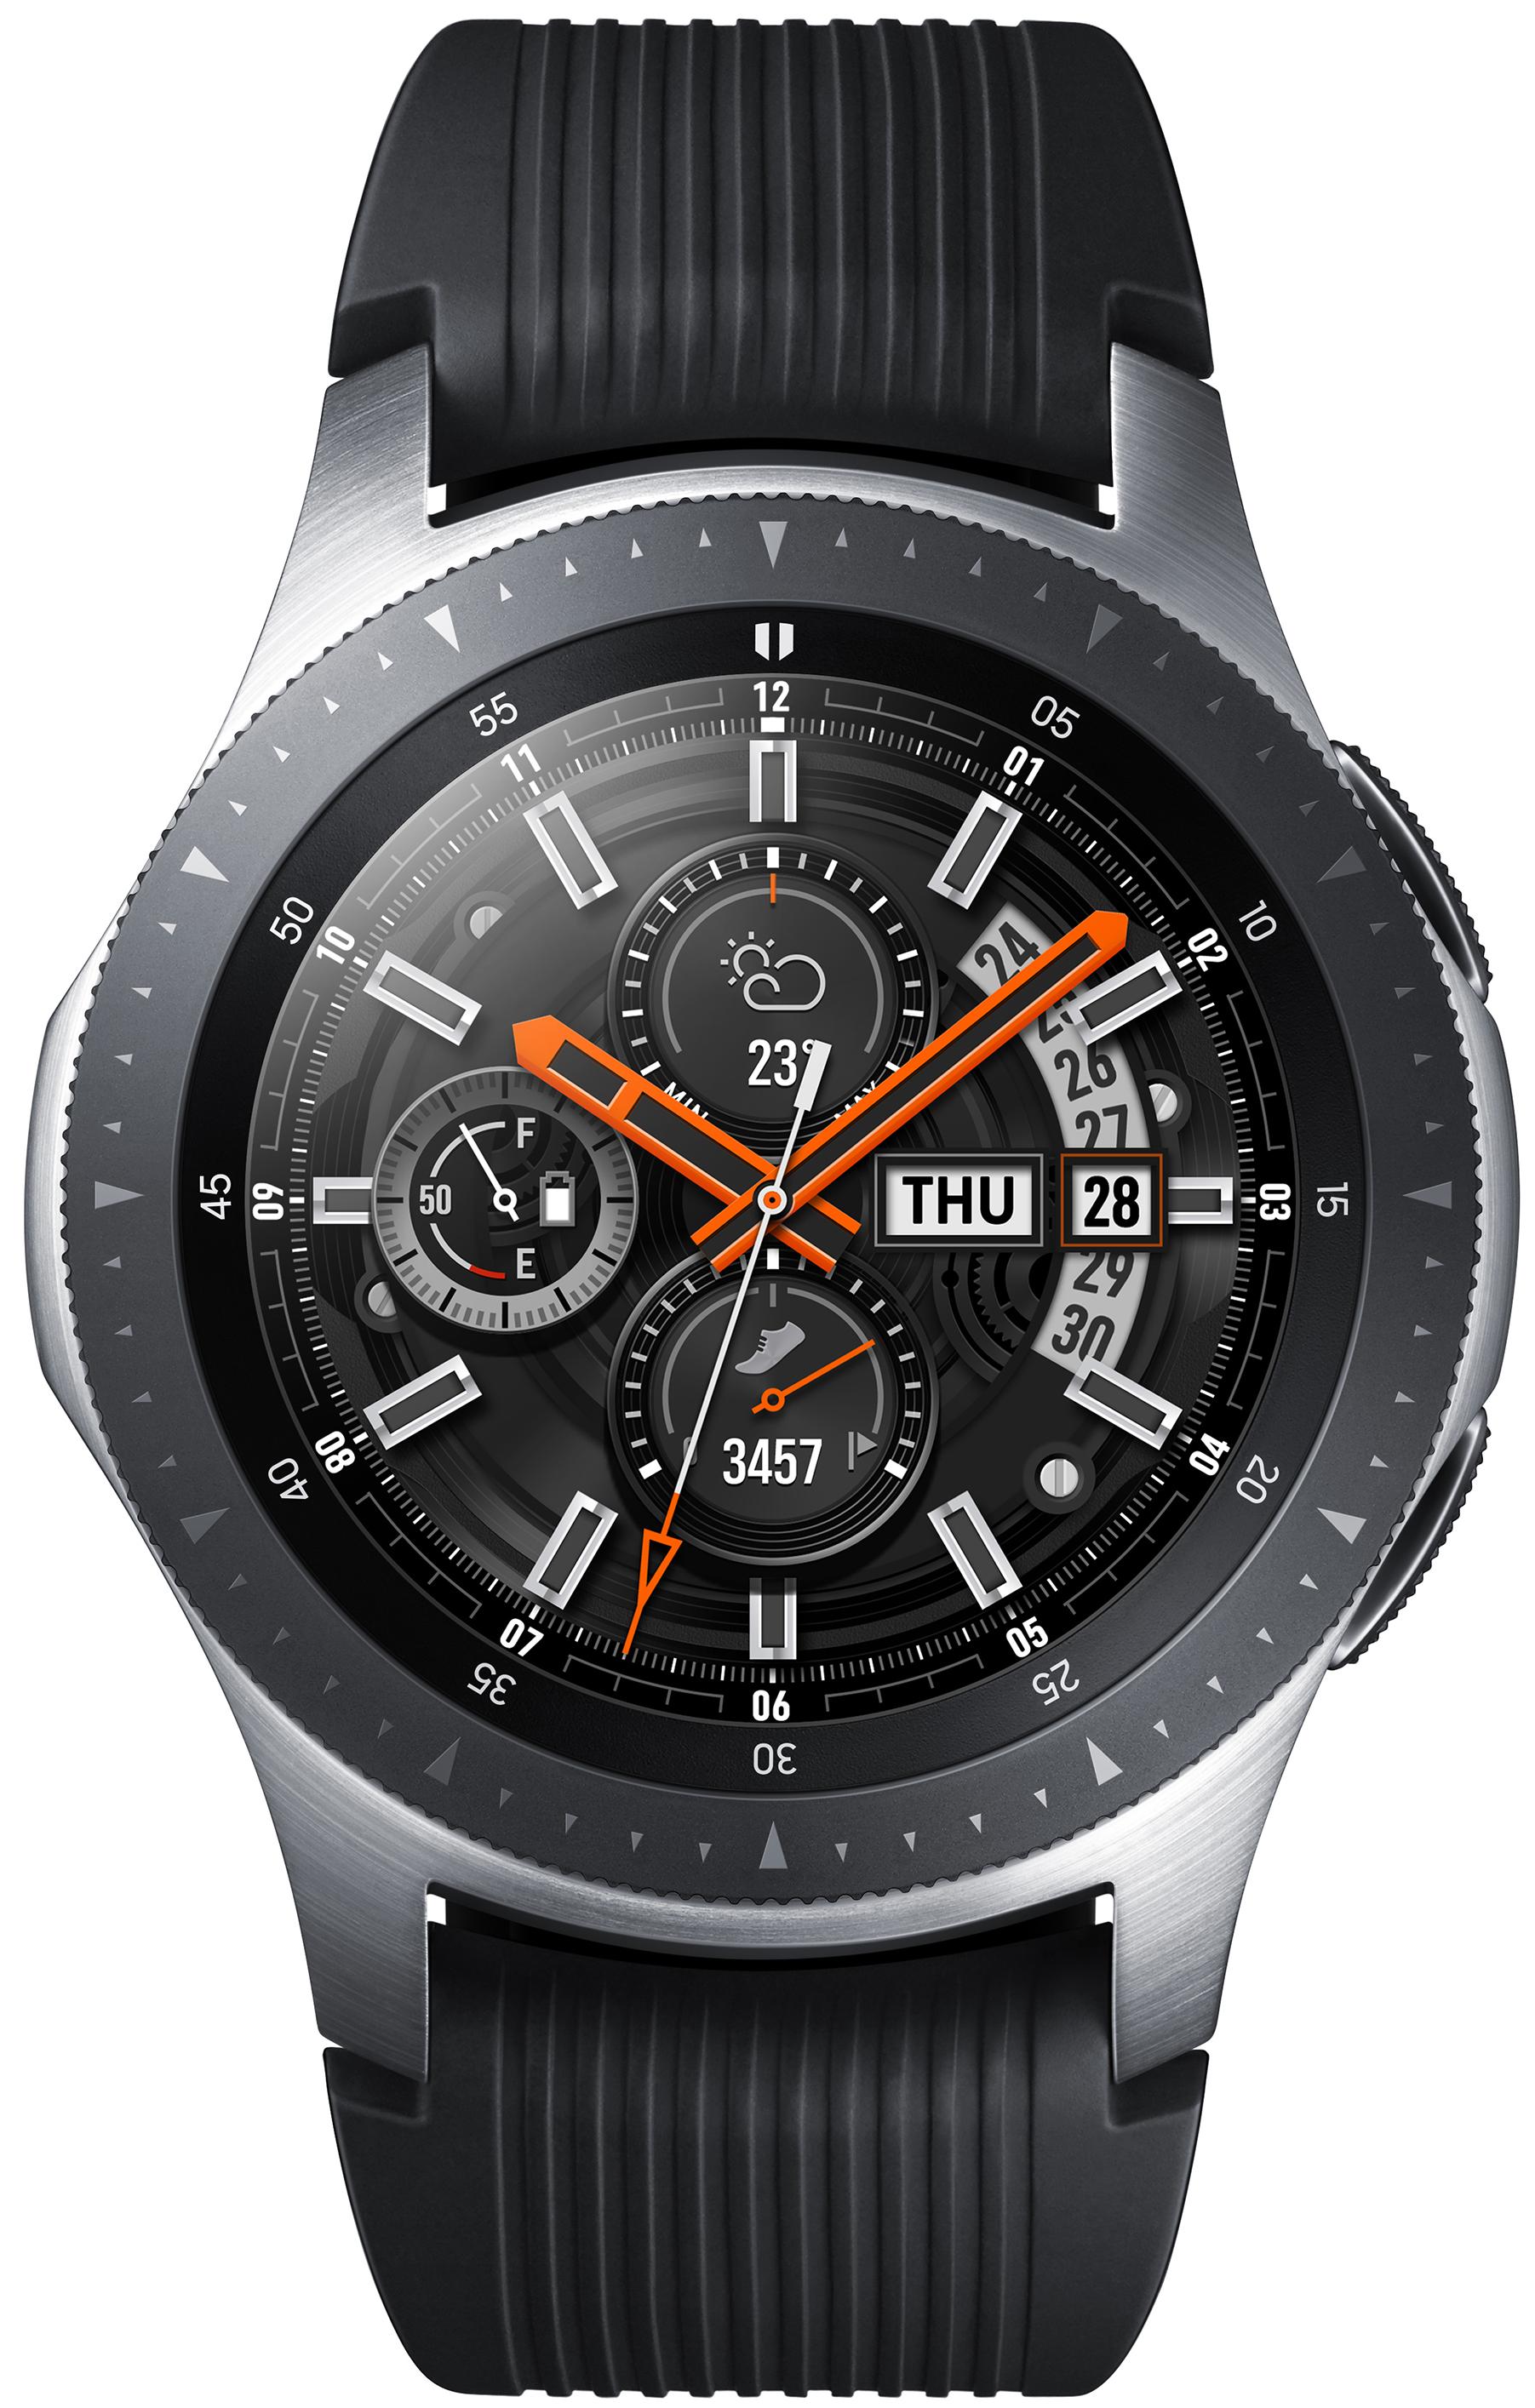 Часы Samsung Galaxy Watch 46 мм silver (SM-R800NZSASER) 0200-1758 Galaxy Watch 46 мм silver (SM-R800NZSASER) - фото 3